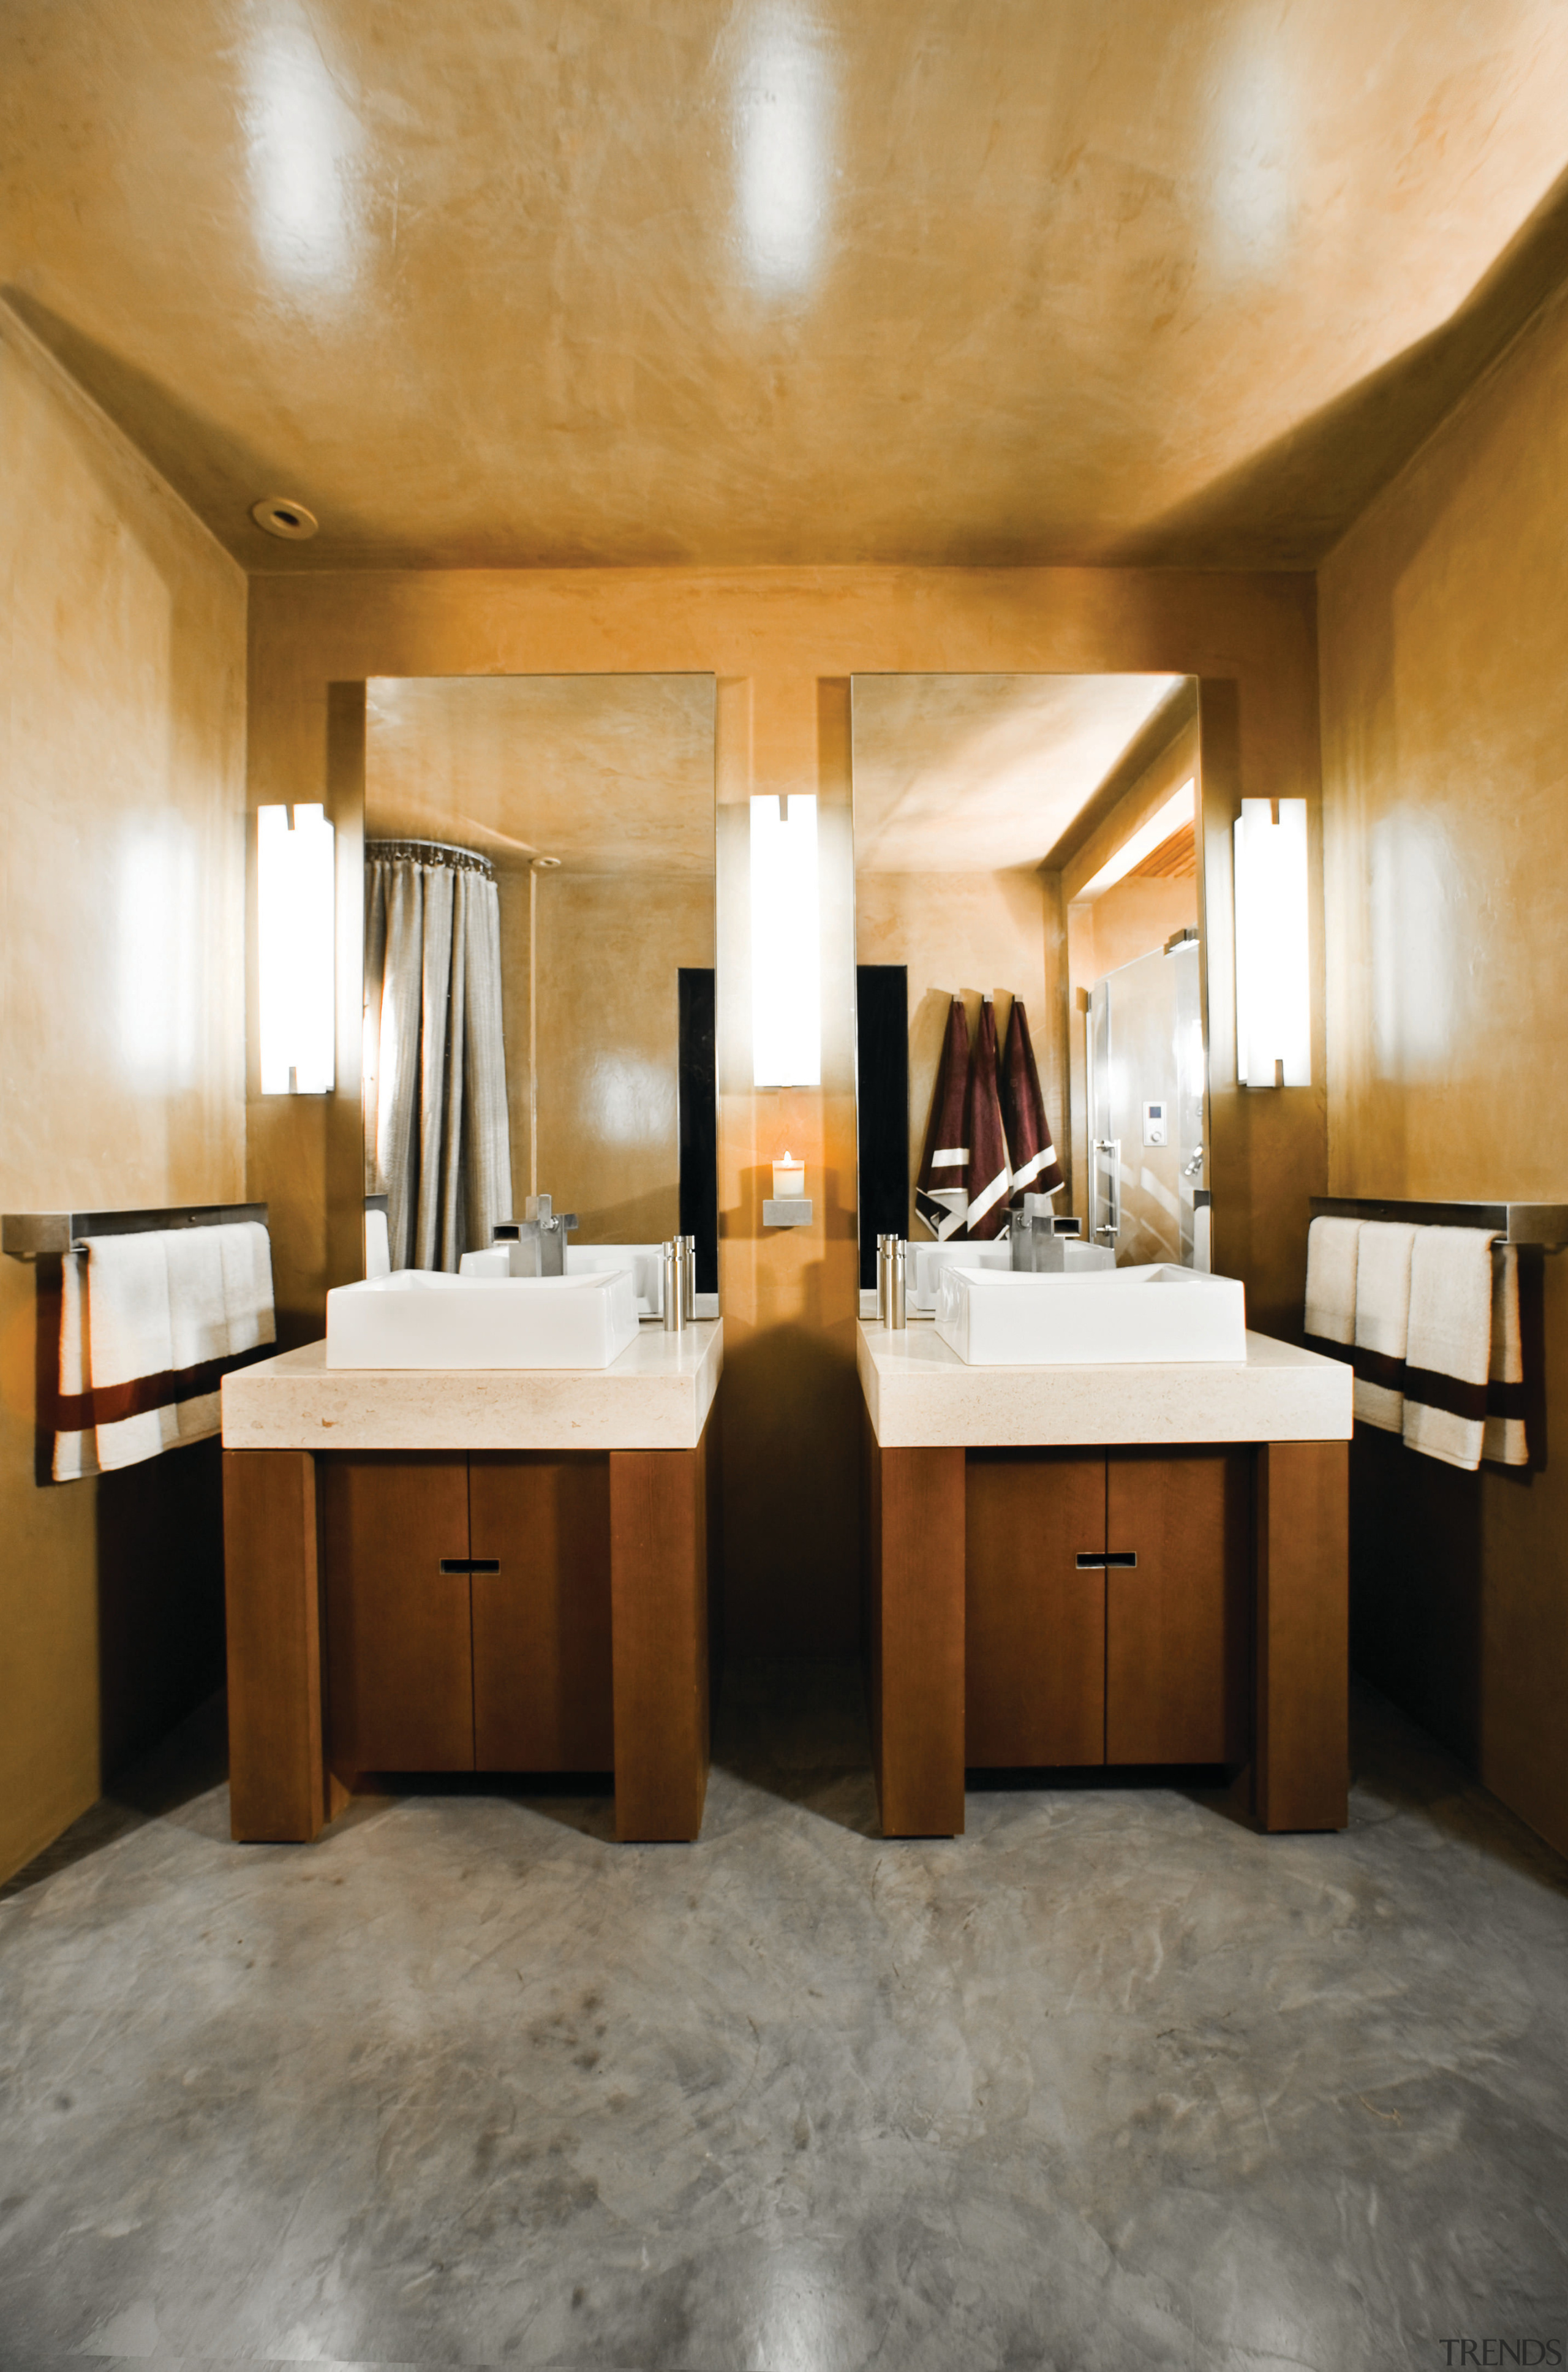 Image of bathroom by Kohler. - Image of bathroom, ceiling, floor, flooring, furniture, interior design, room, orange